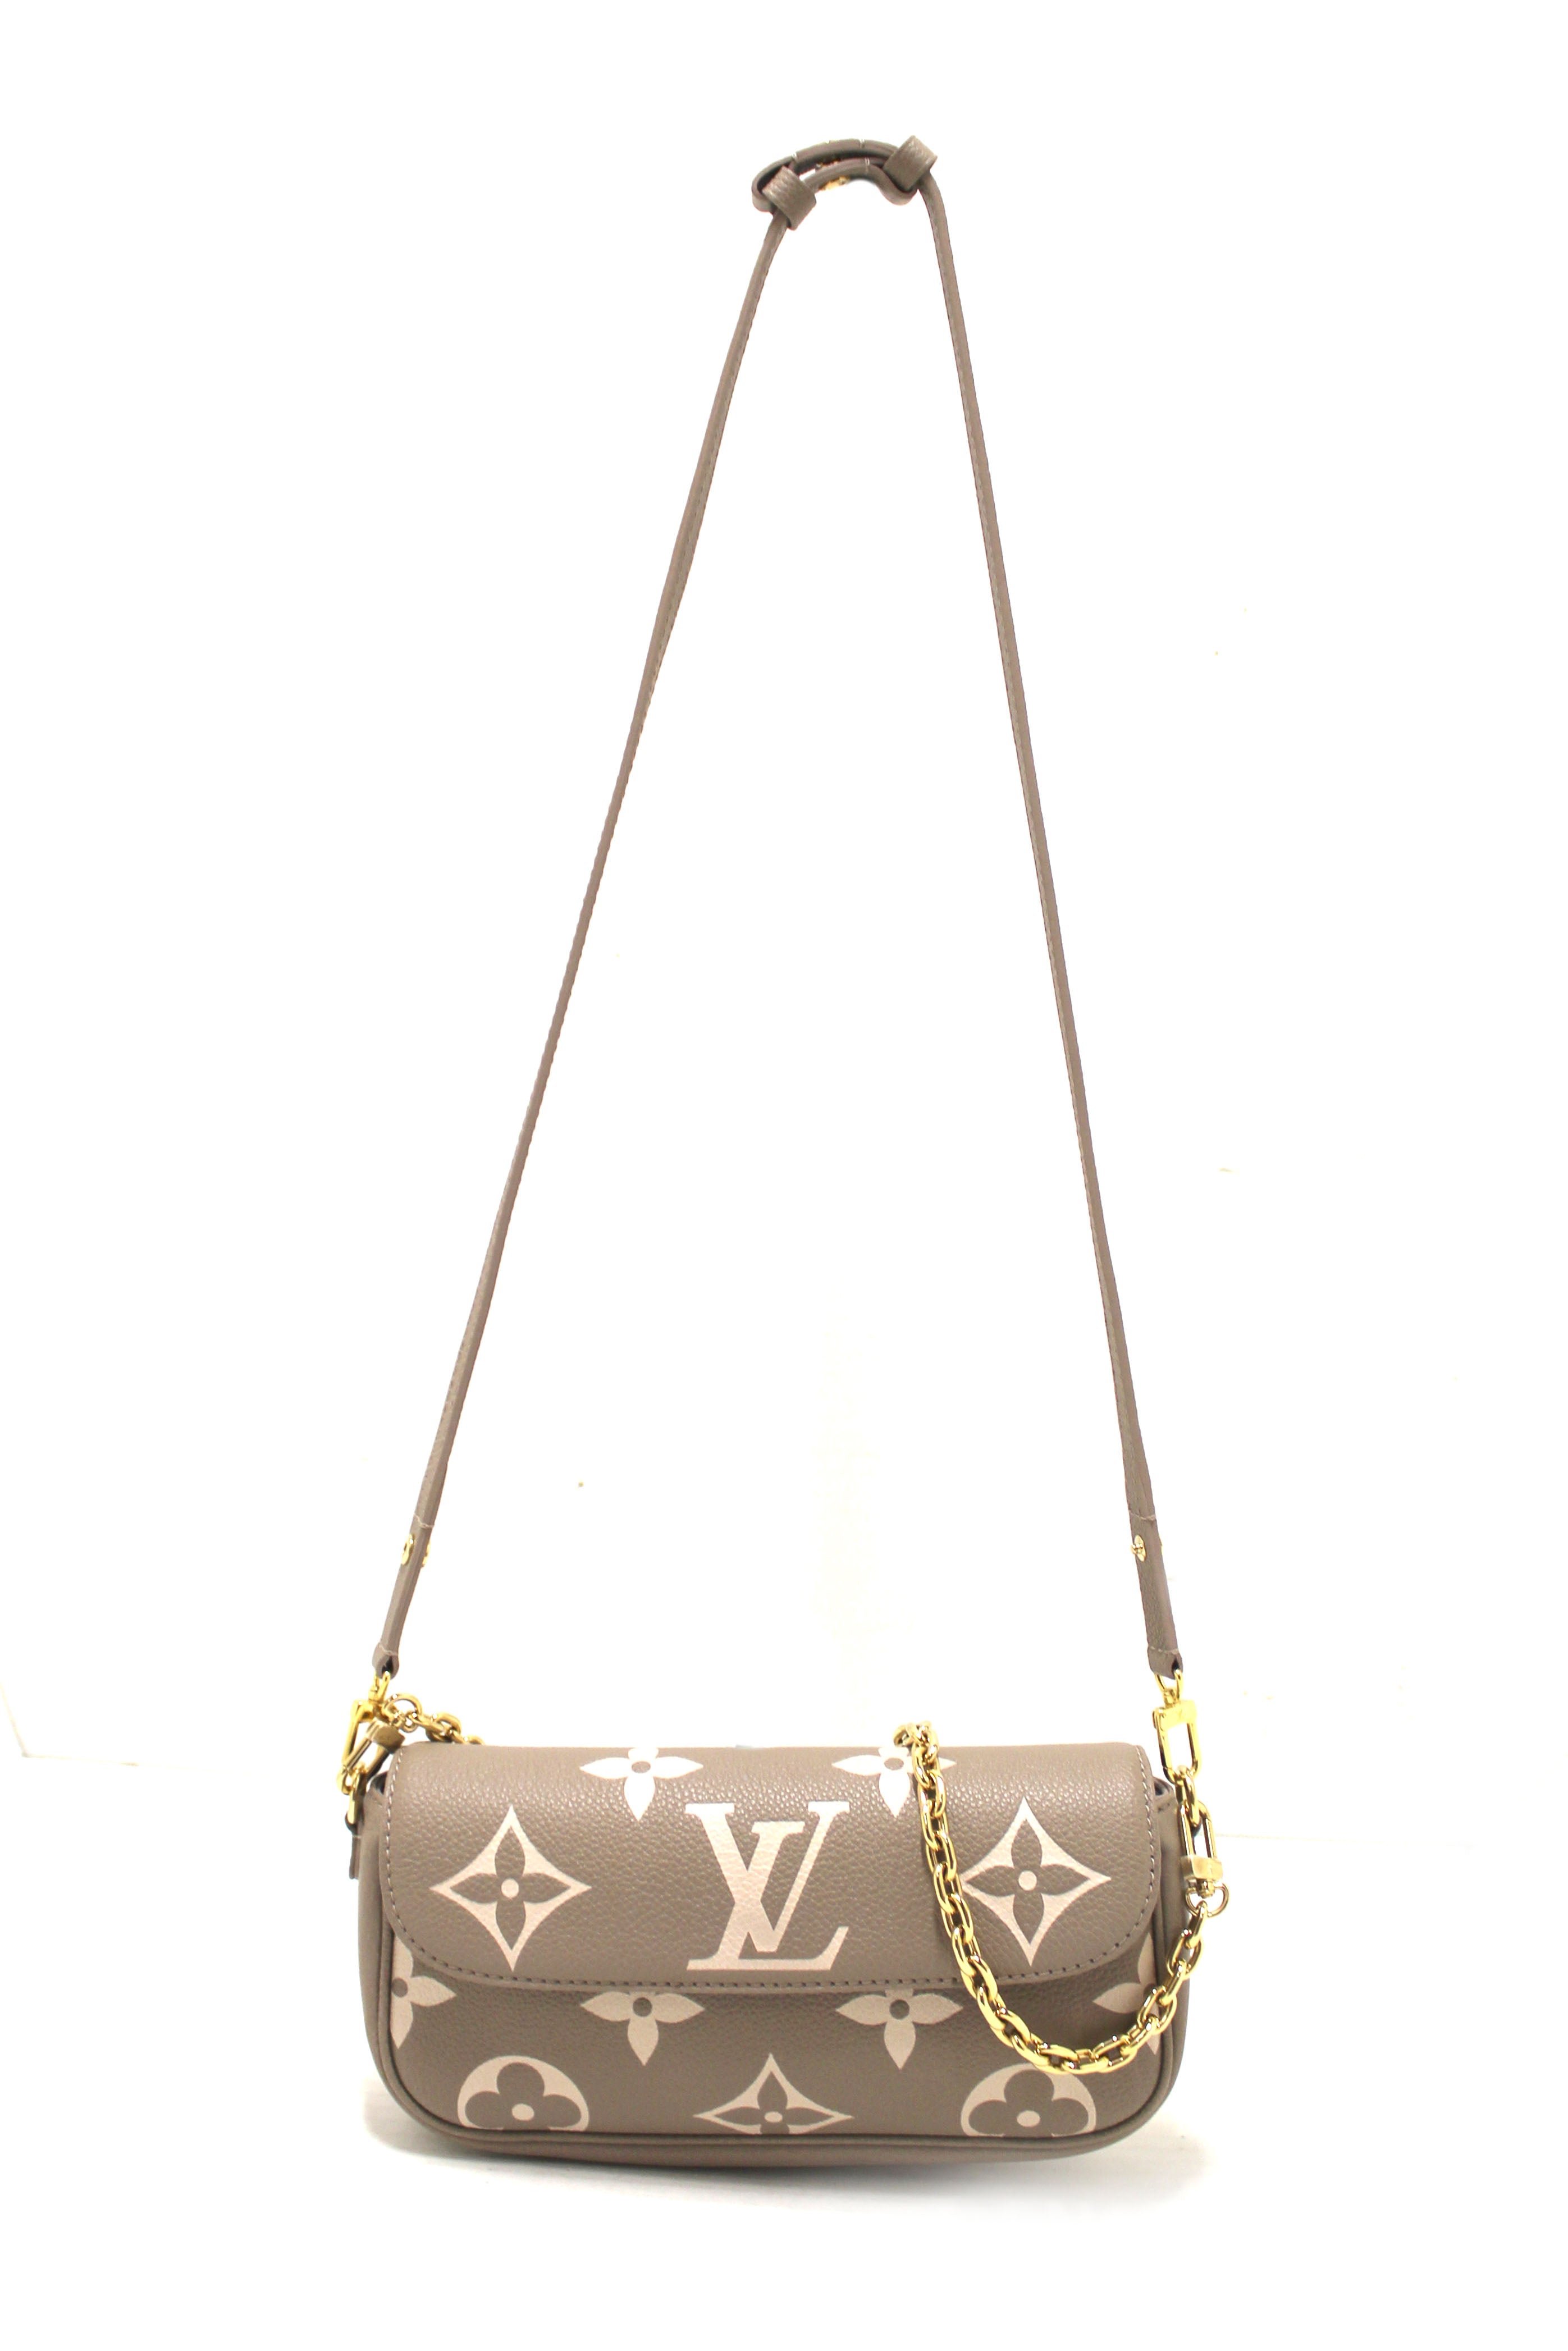 Louis Vuitton Empreinte Bangle, White Gold Grey. Size M